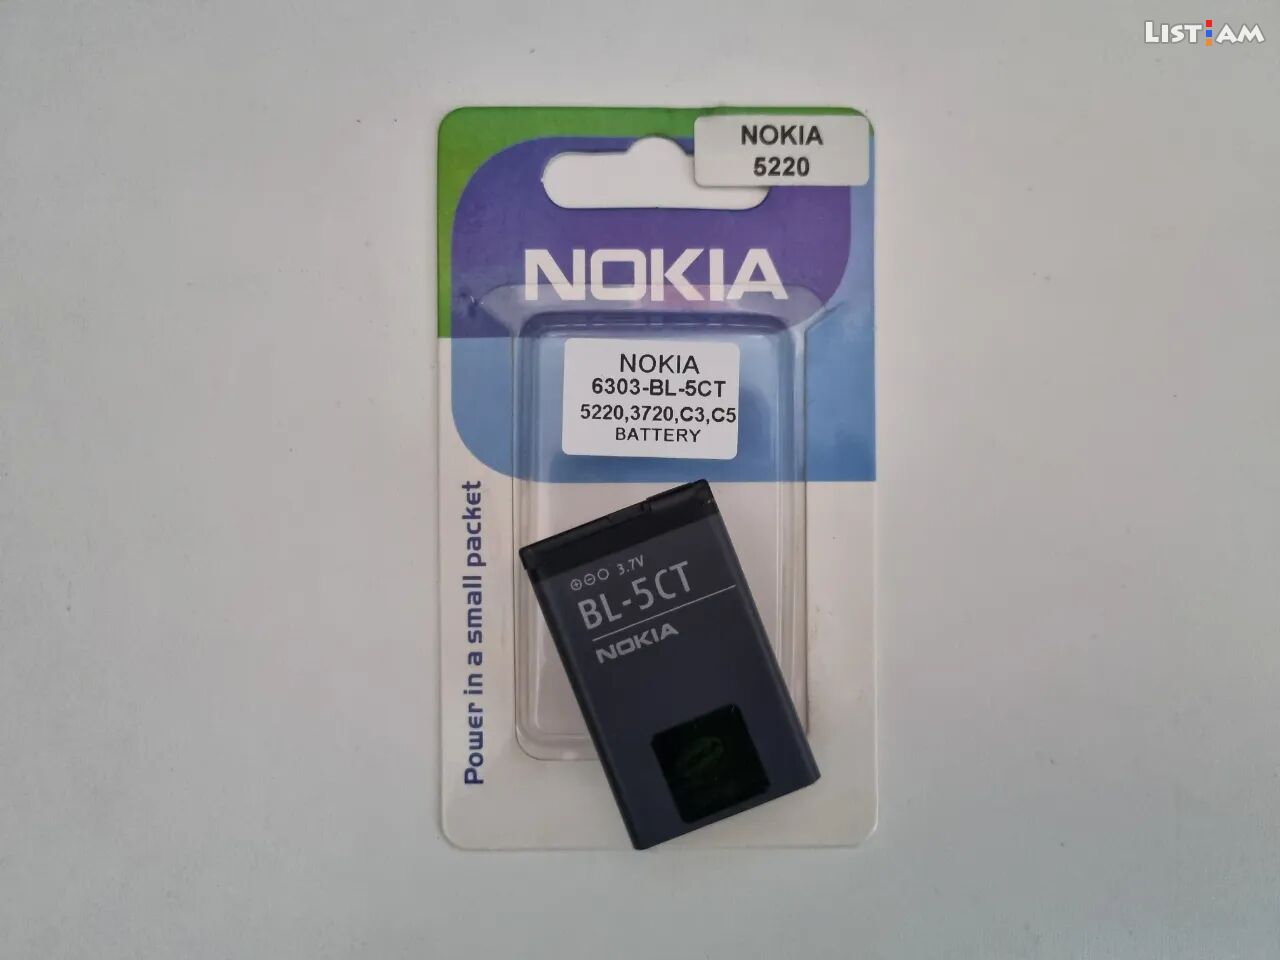 Nokia 6303 battery